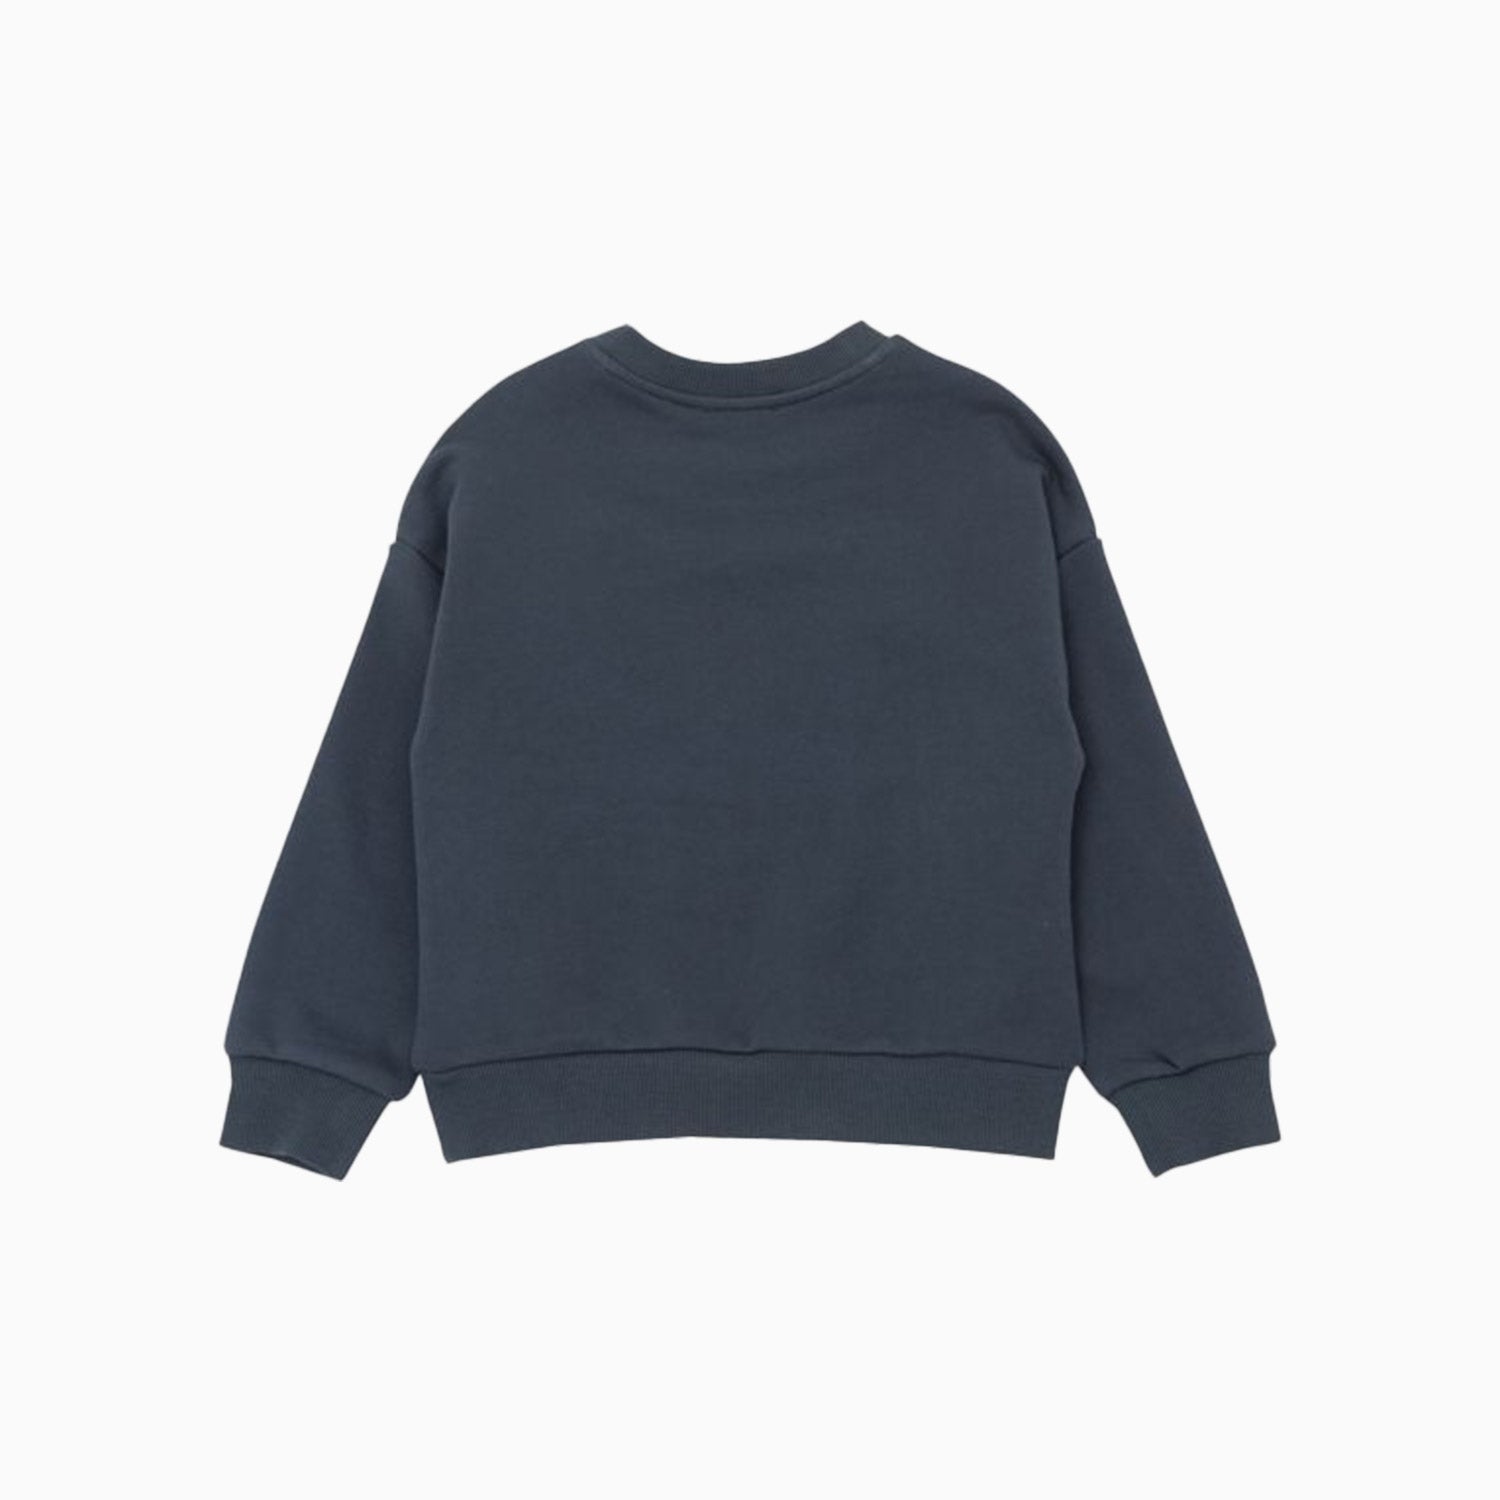 Kenzo Kid's Sweatshirt In No Brushed - Color: Charcoalgrey - Kids Premium Clothing -